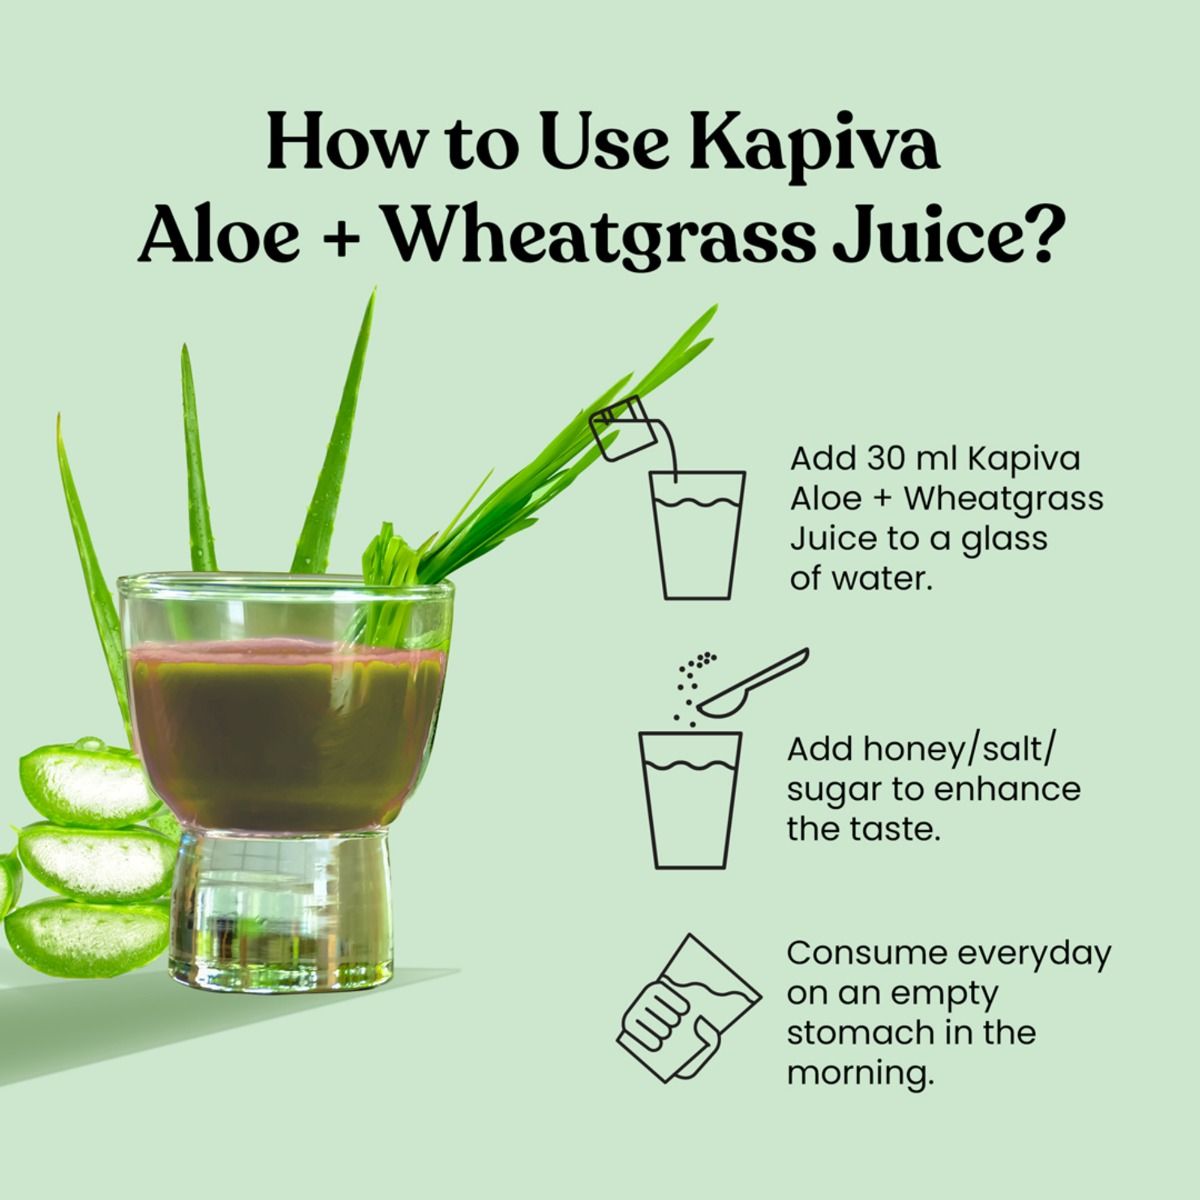 Kapiva Aloe Vera Wheatgrass Juice, 1 L, Pack of 1 